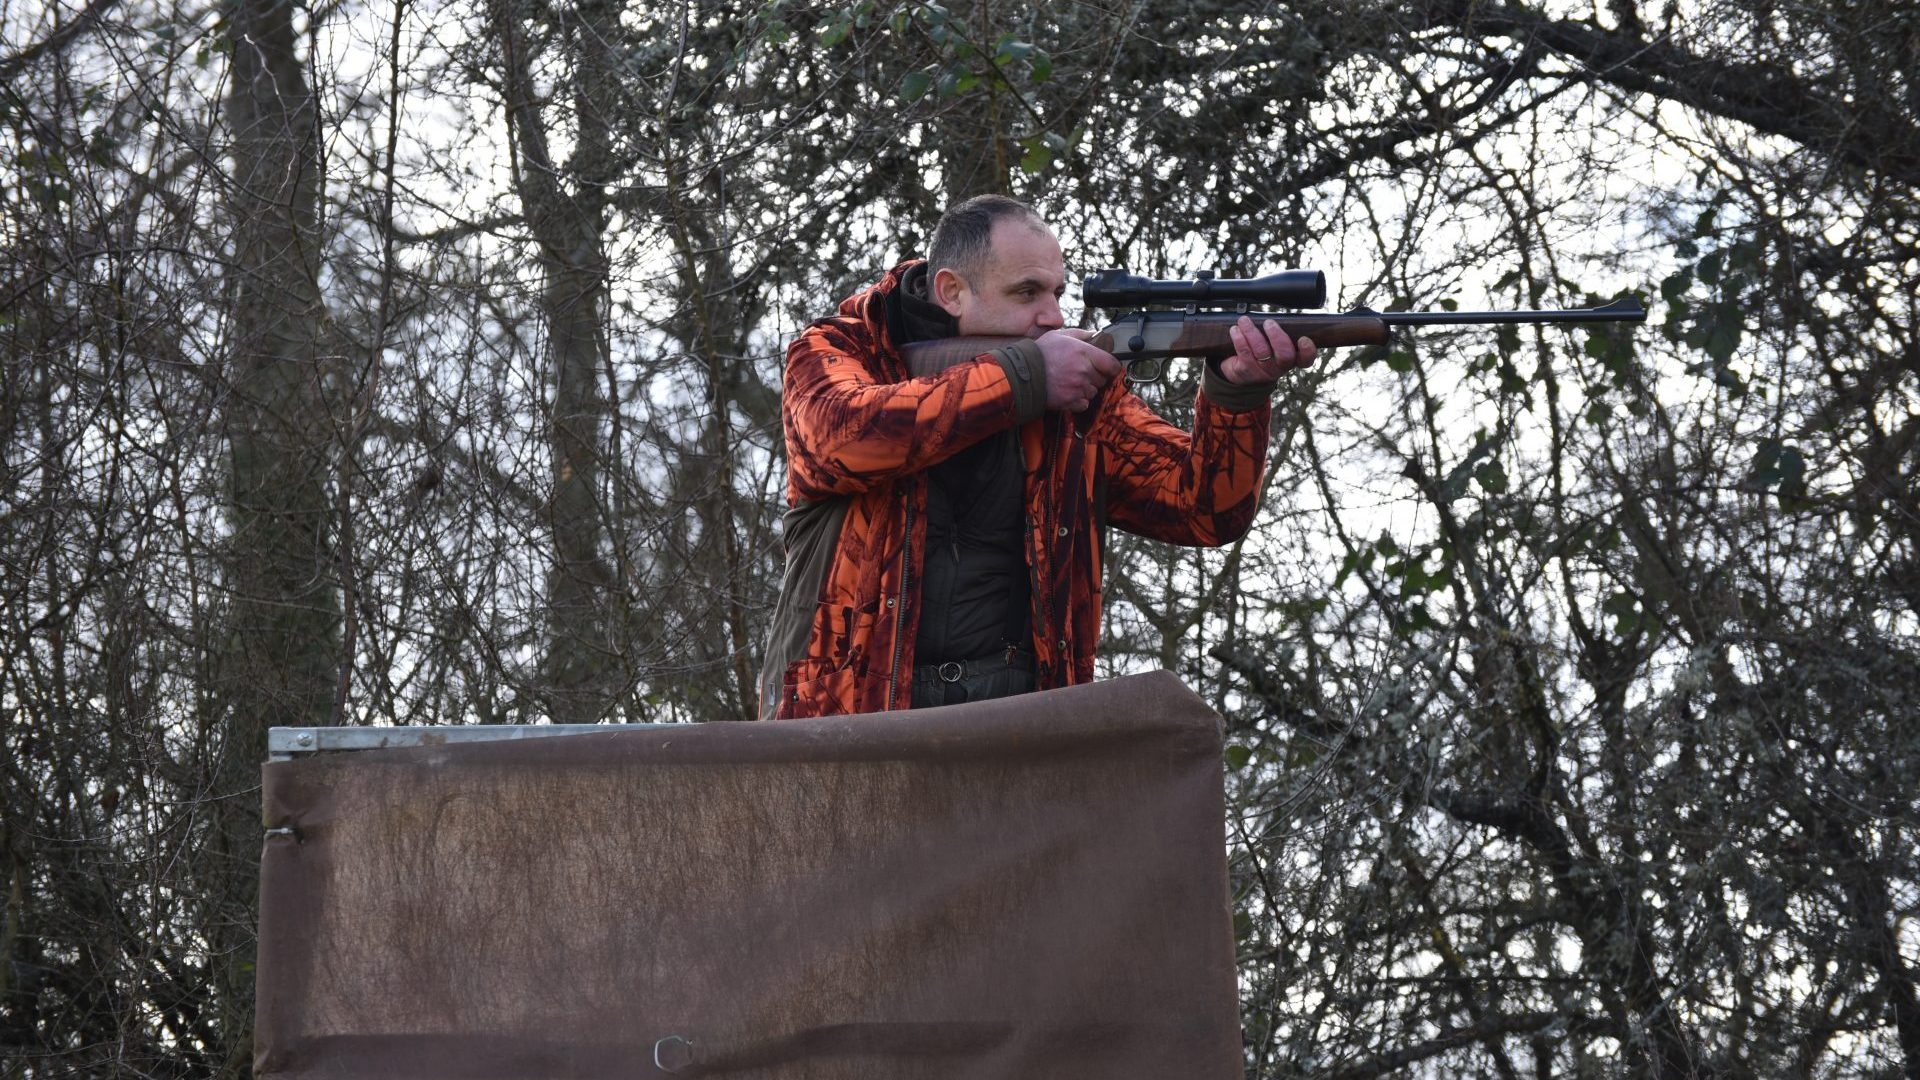 France hunter posing with his gun.